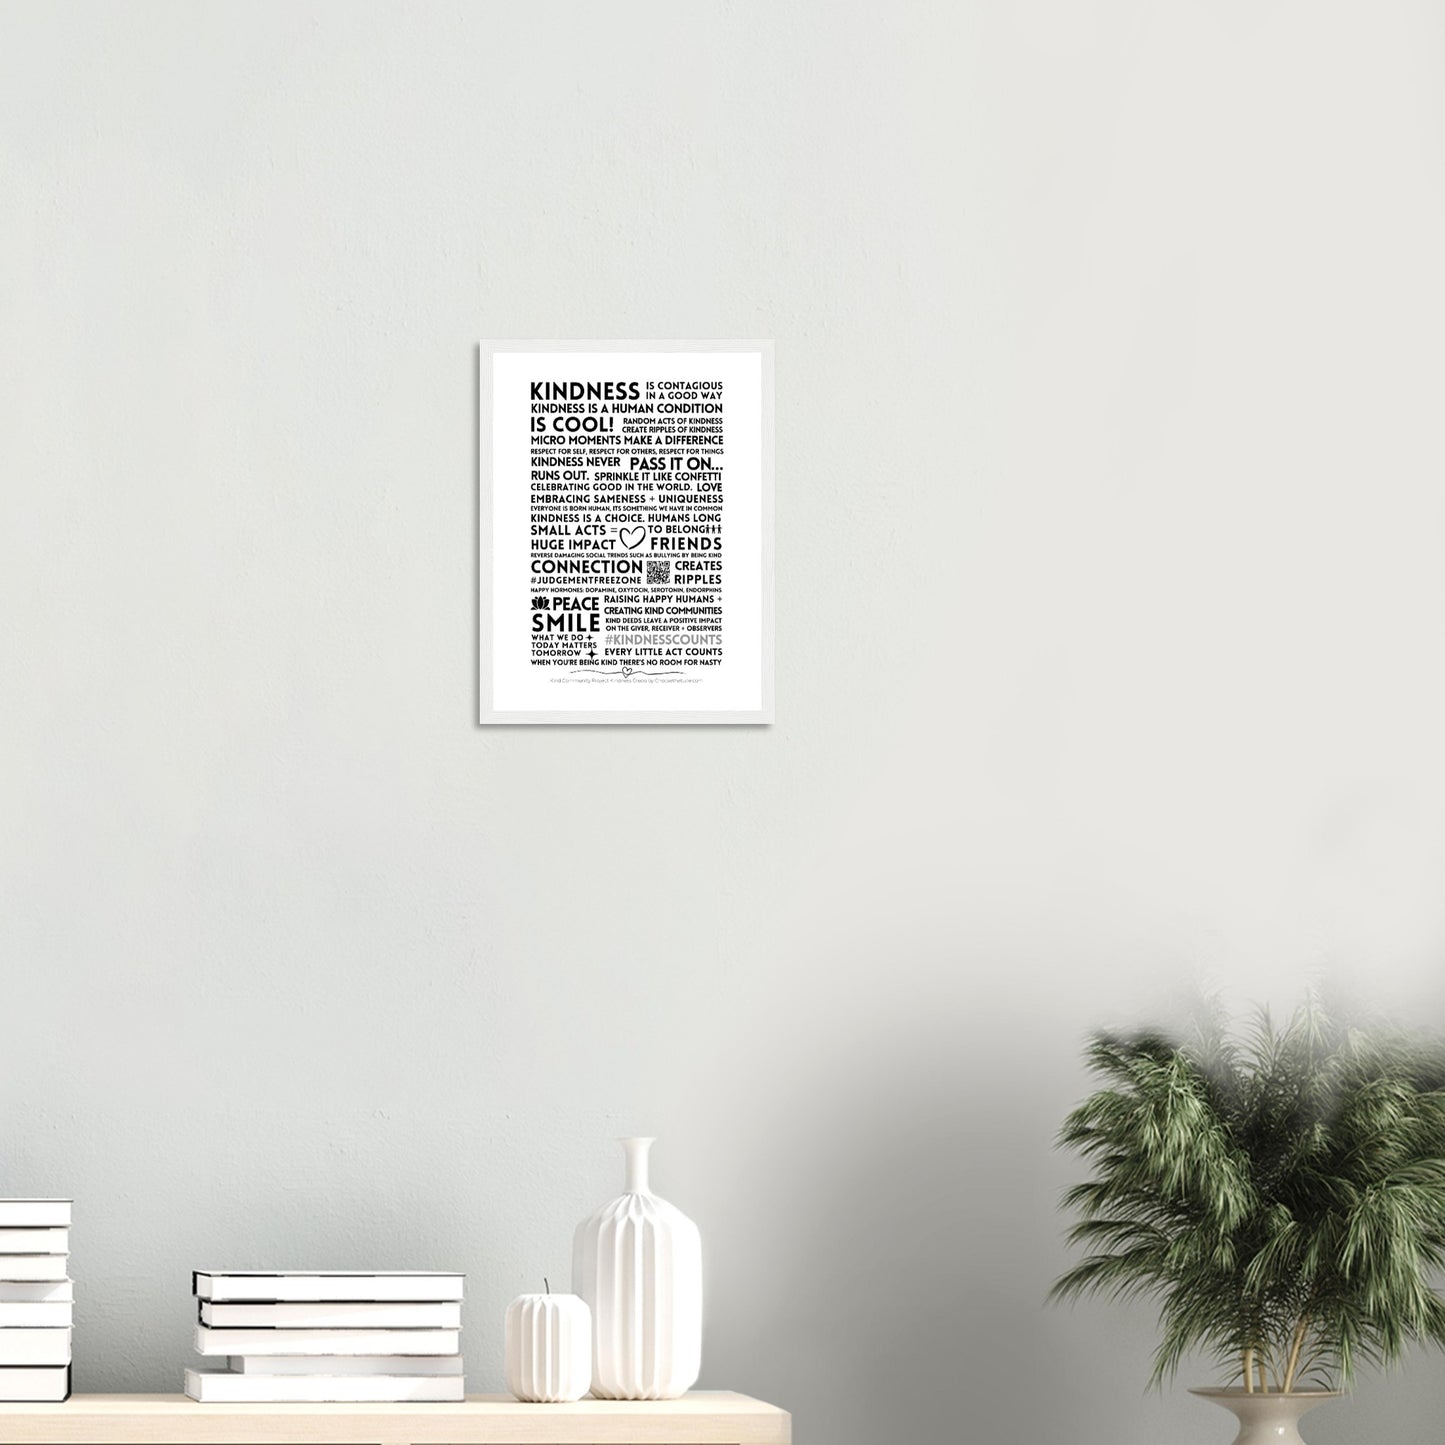 Kindness Creed Premium Matte Paper Wooden Framed Poster